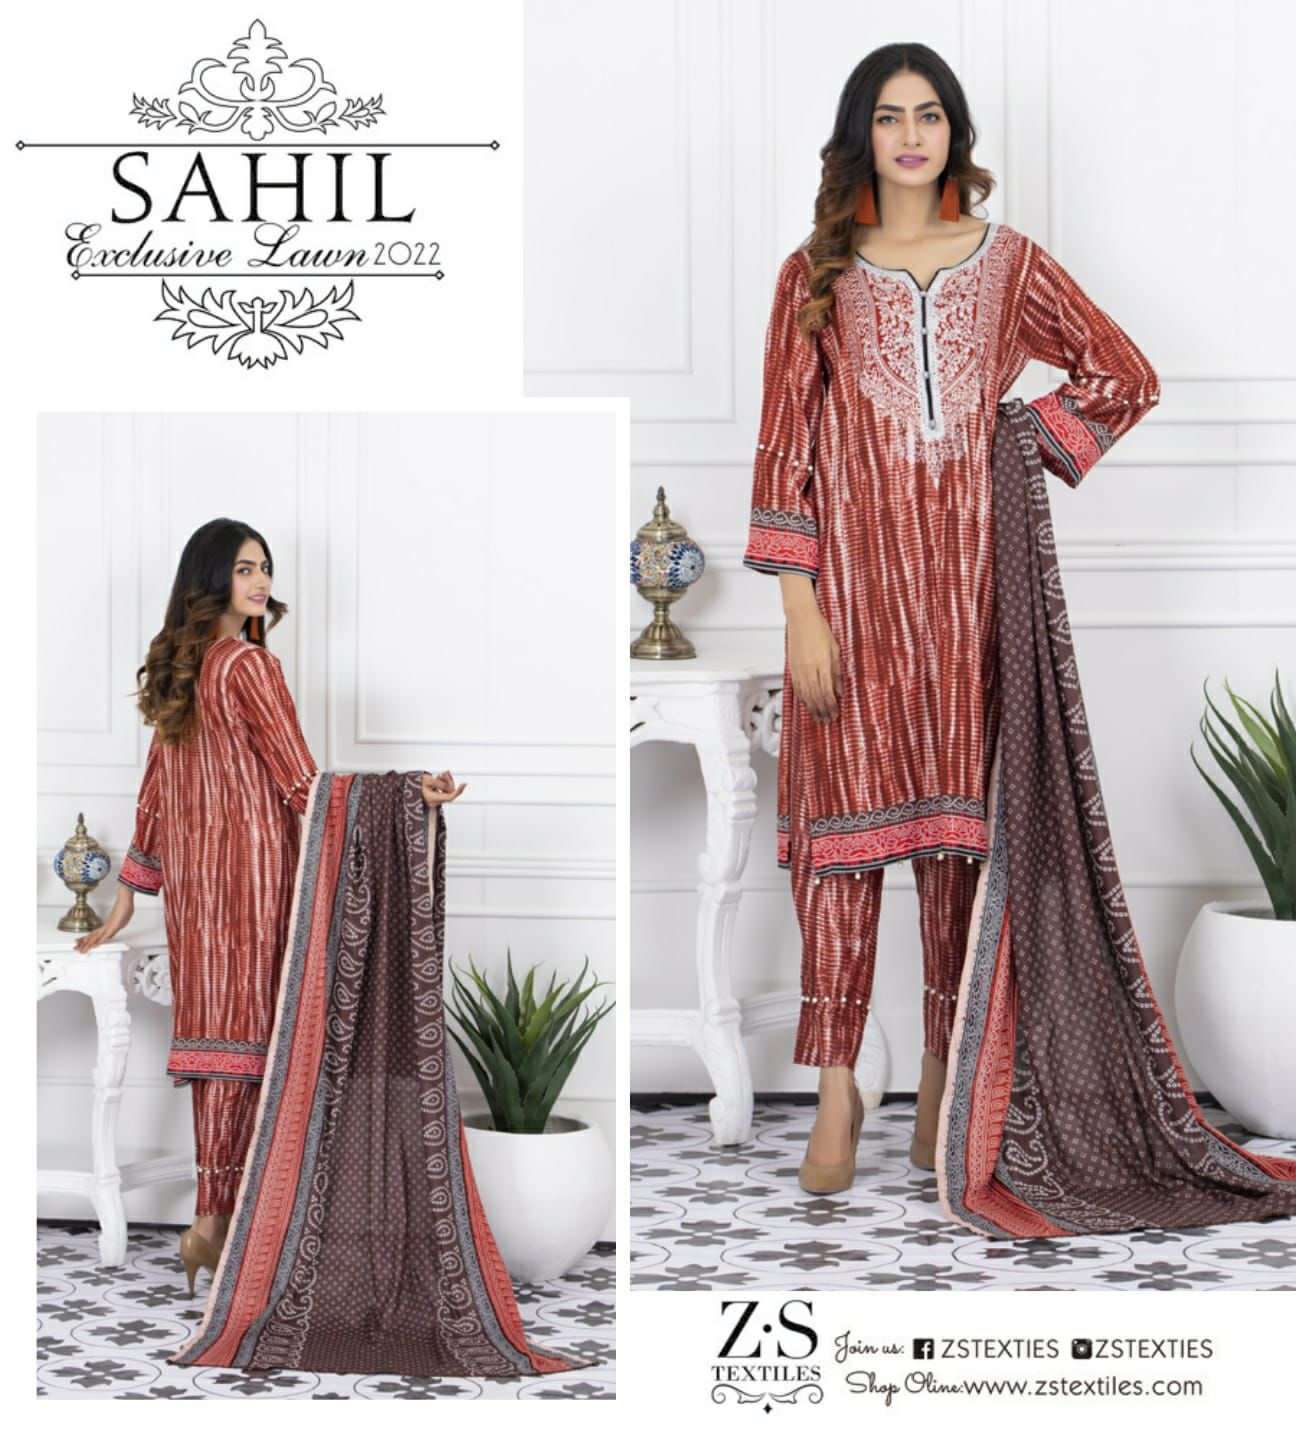 ZS Textiles Sahil Luxury Lawn 21 Printed Lawn Cotton Pakista...